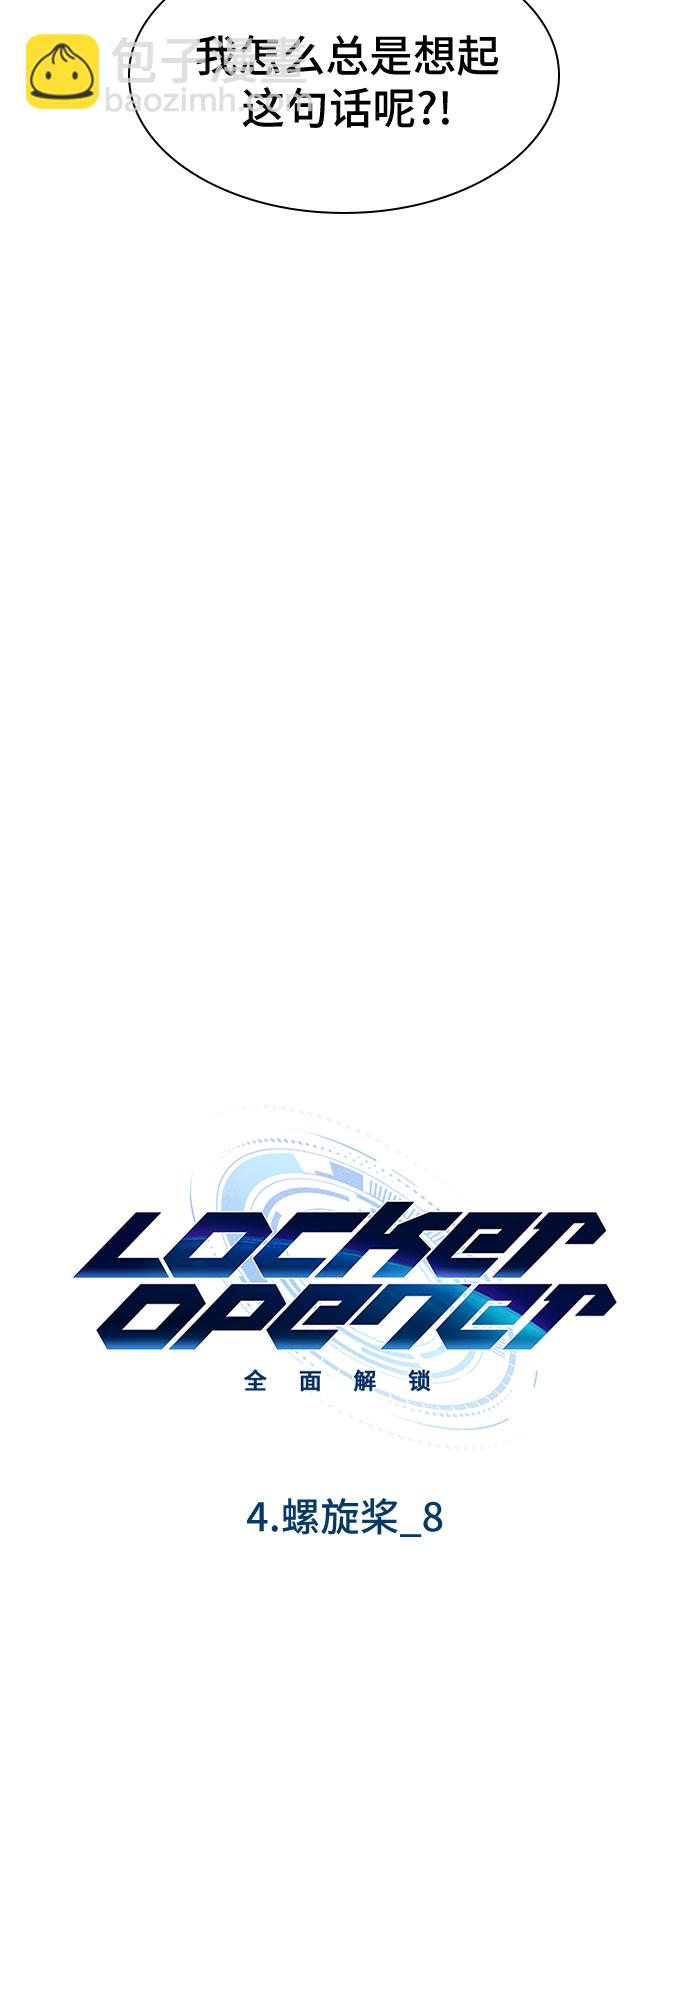 LOCKER OPENER 全面解鎖 - [第40話] 螺旋槳_8(1/2) - 6